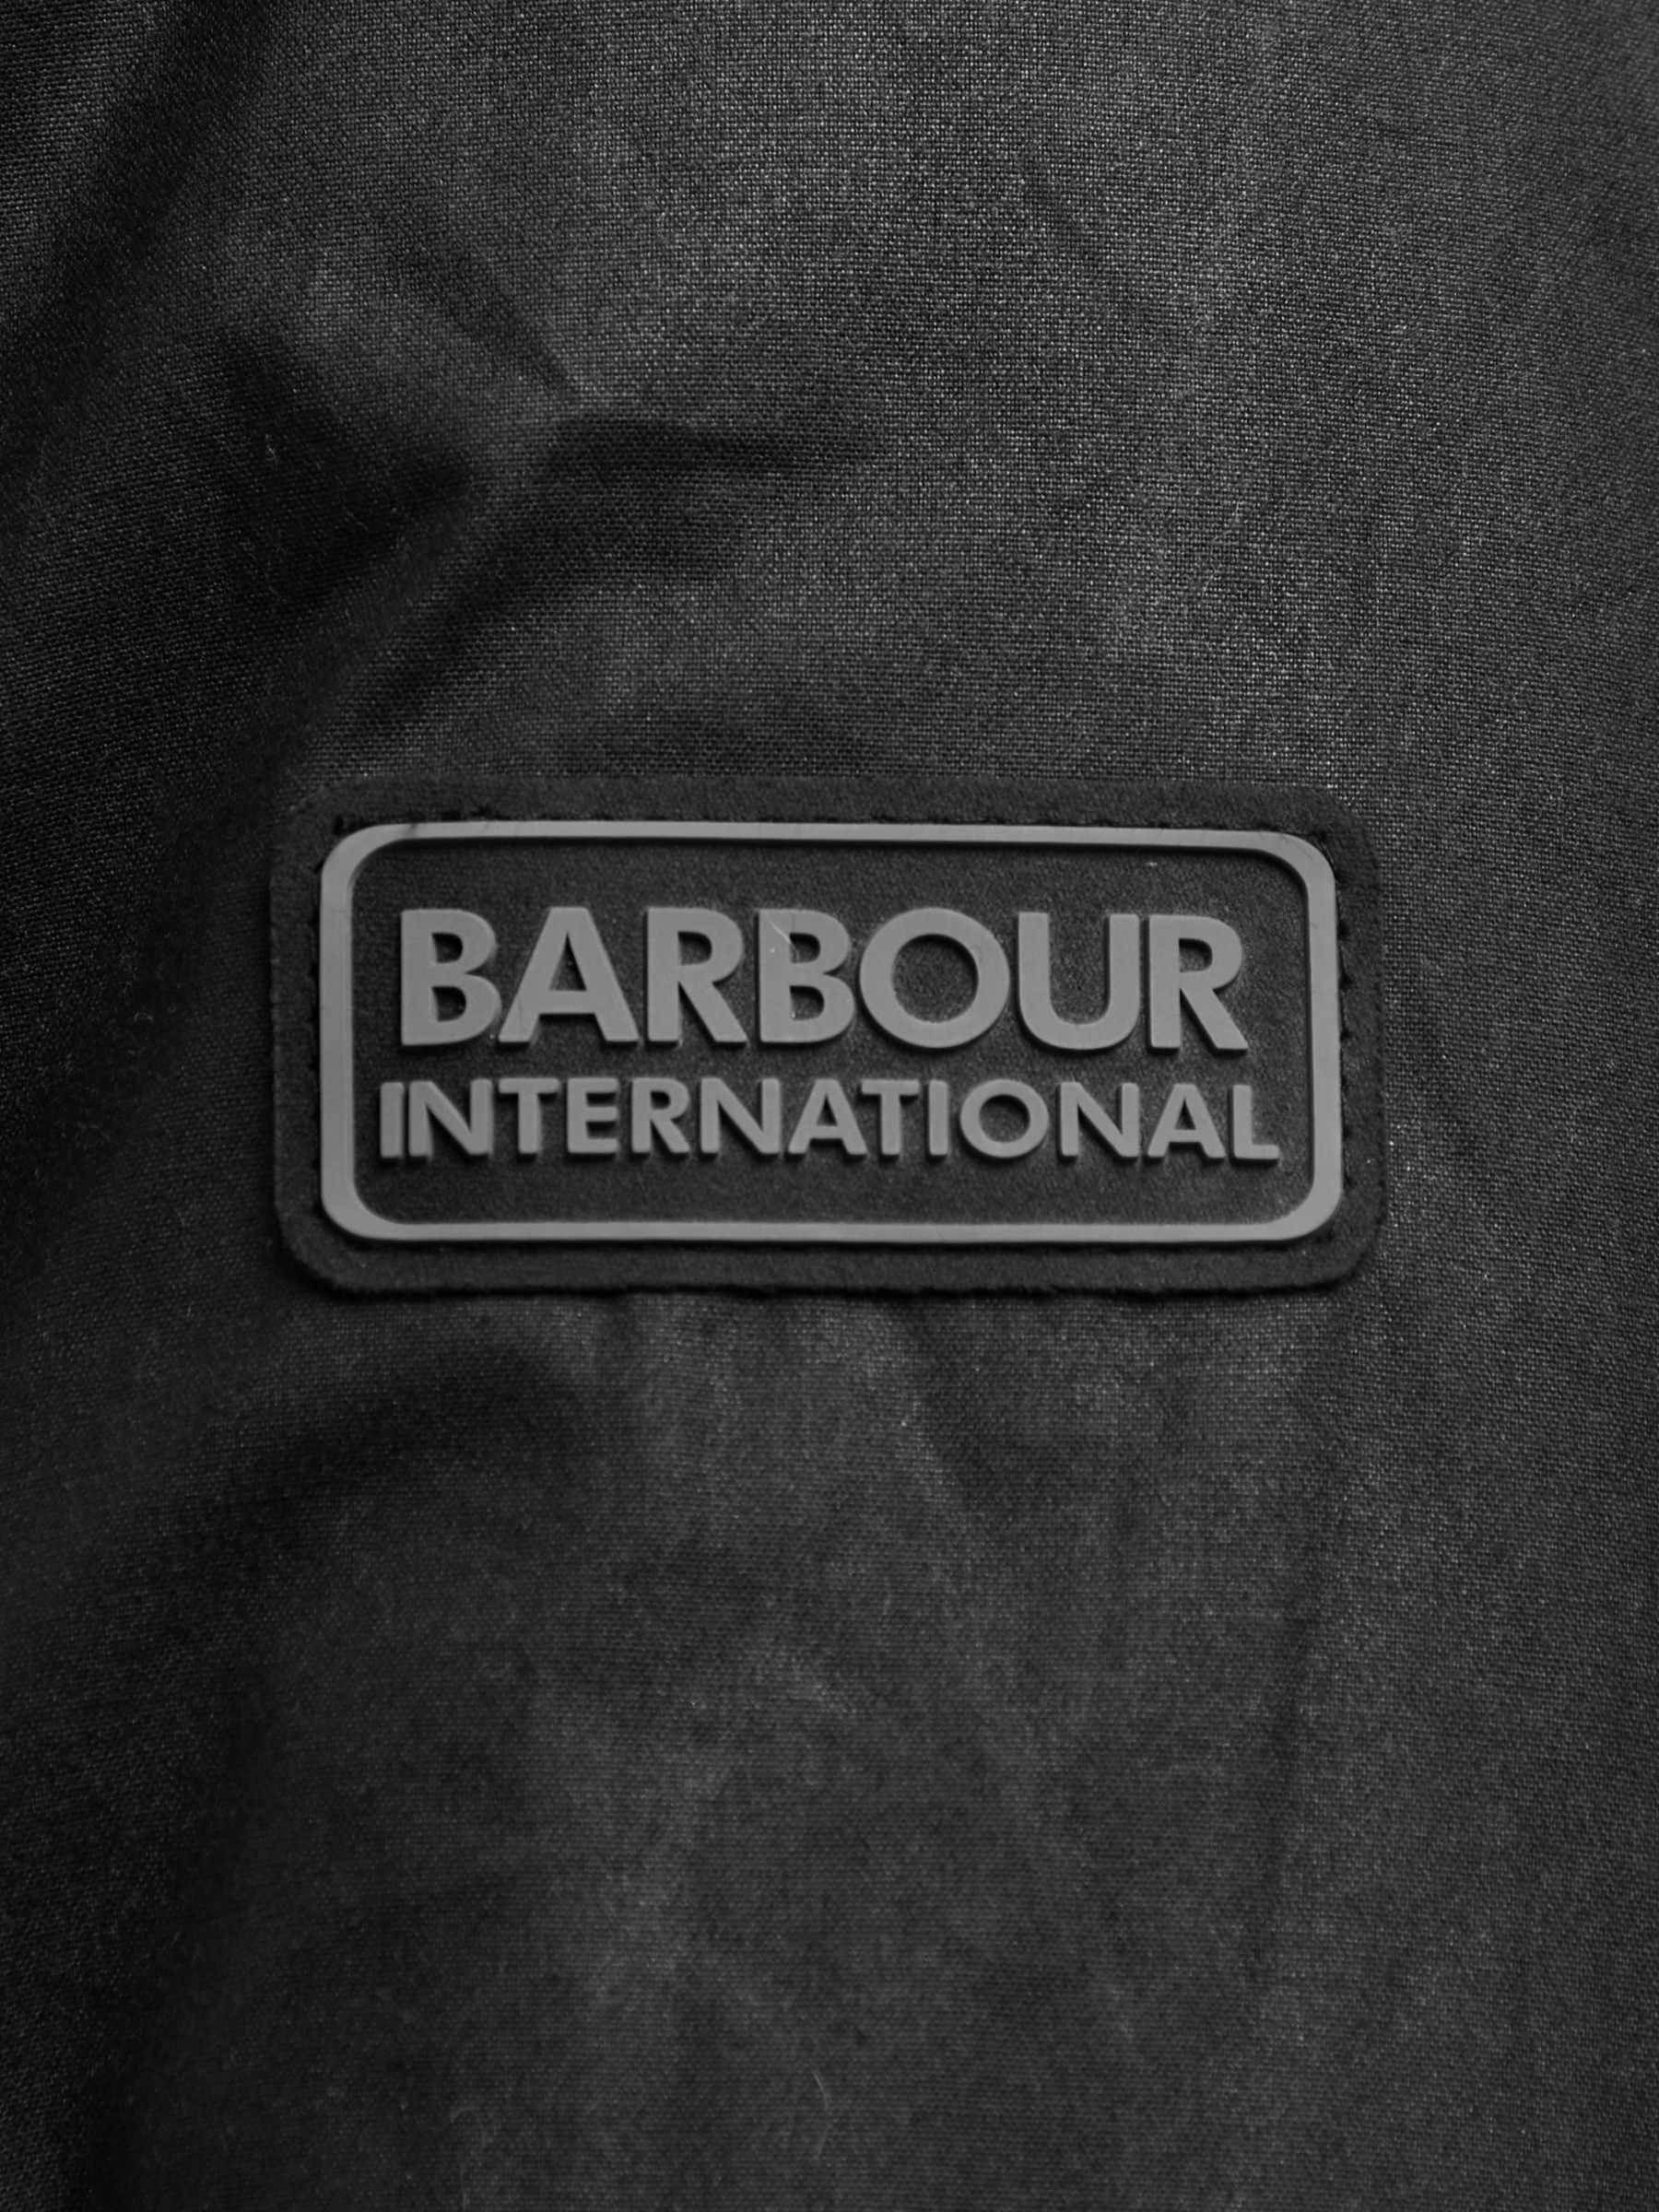 Buy Barbour International Tourer Duke Waxed Jacket Online at johnlewis.com